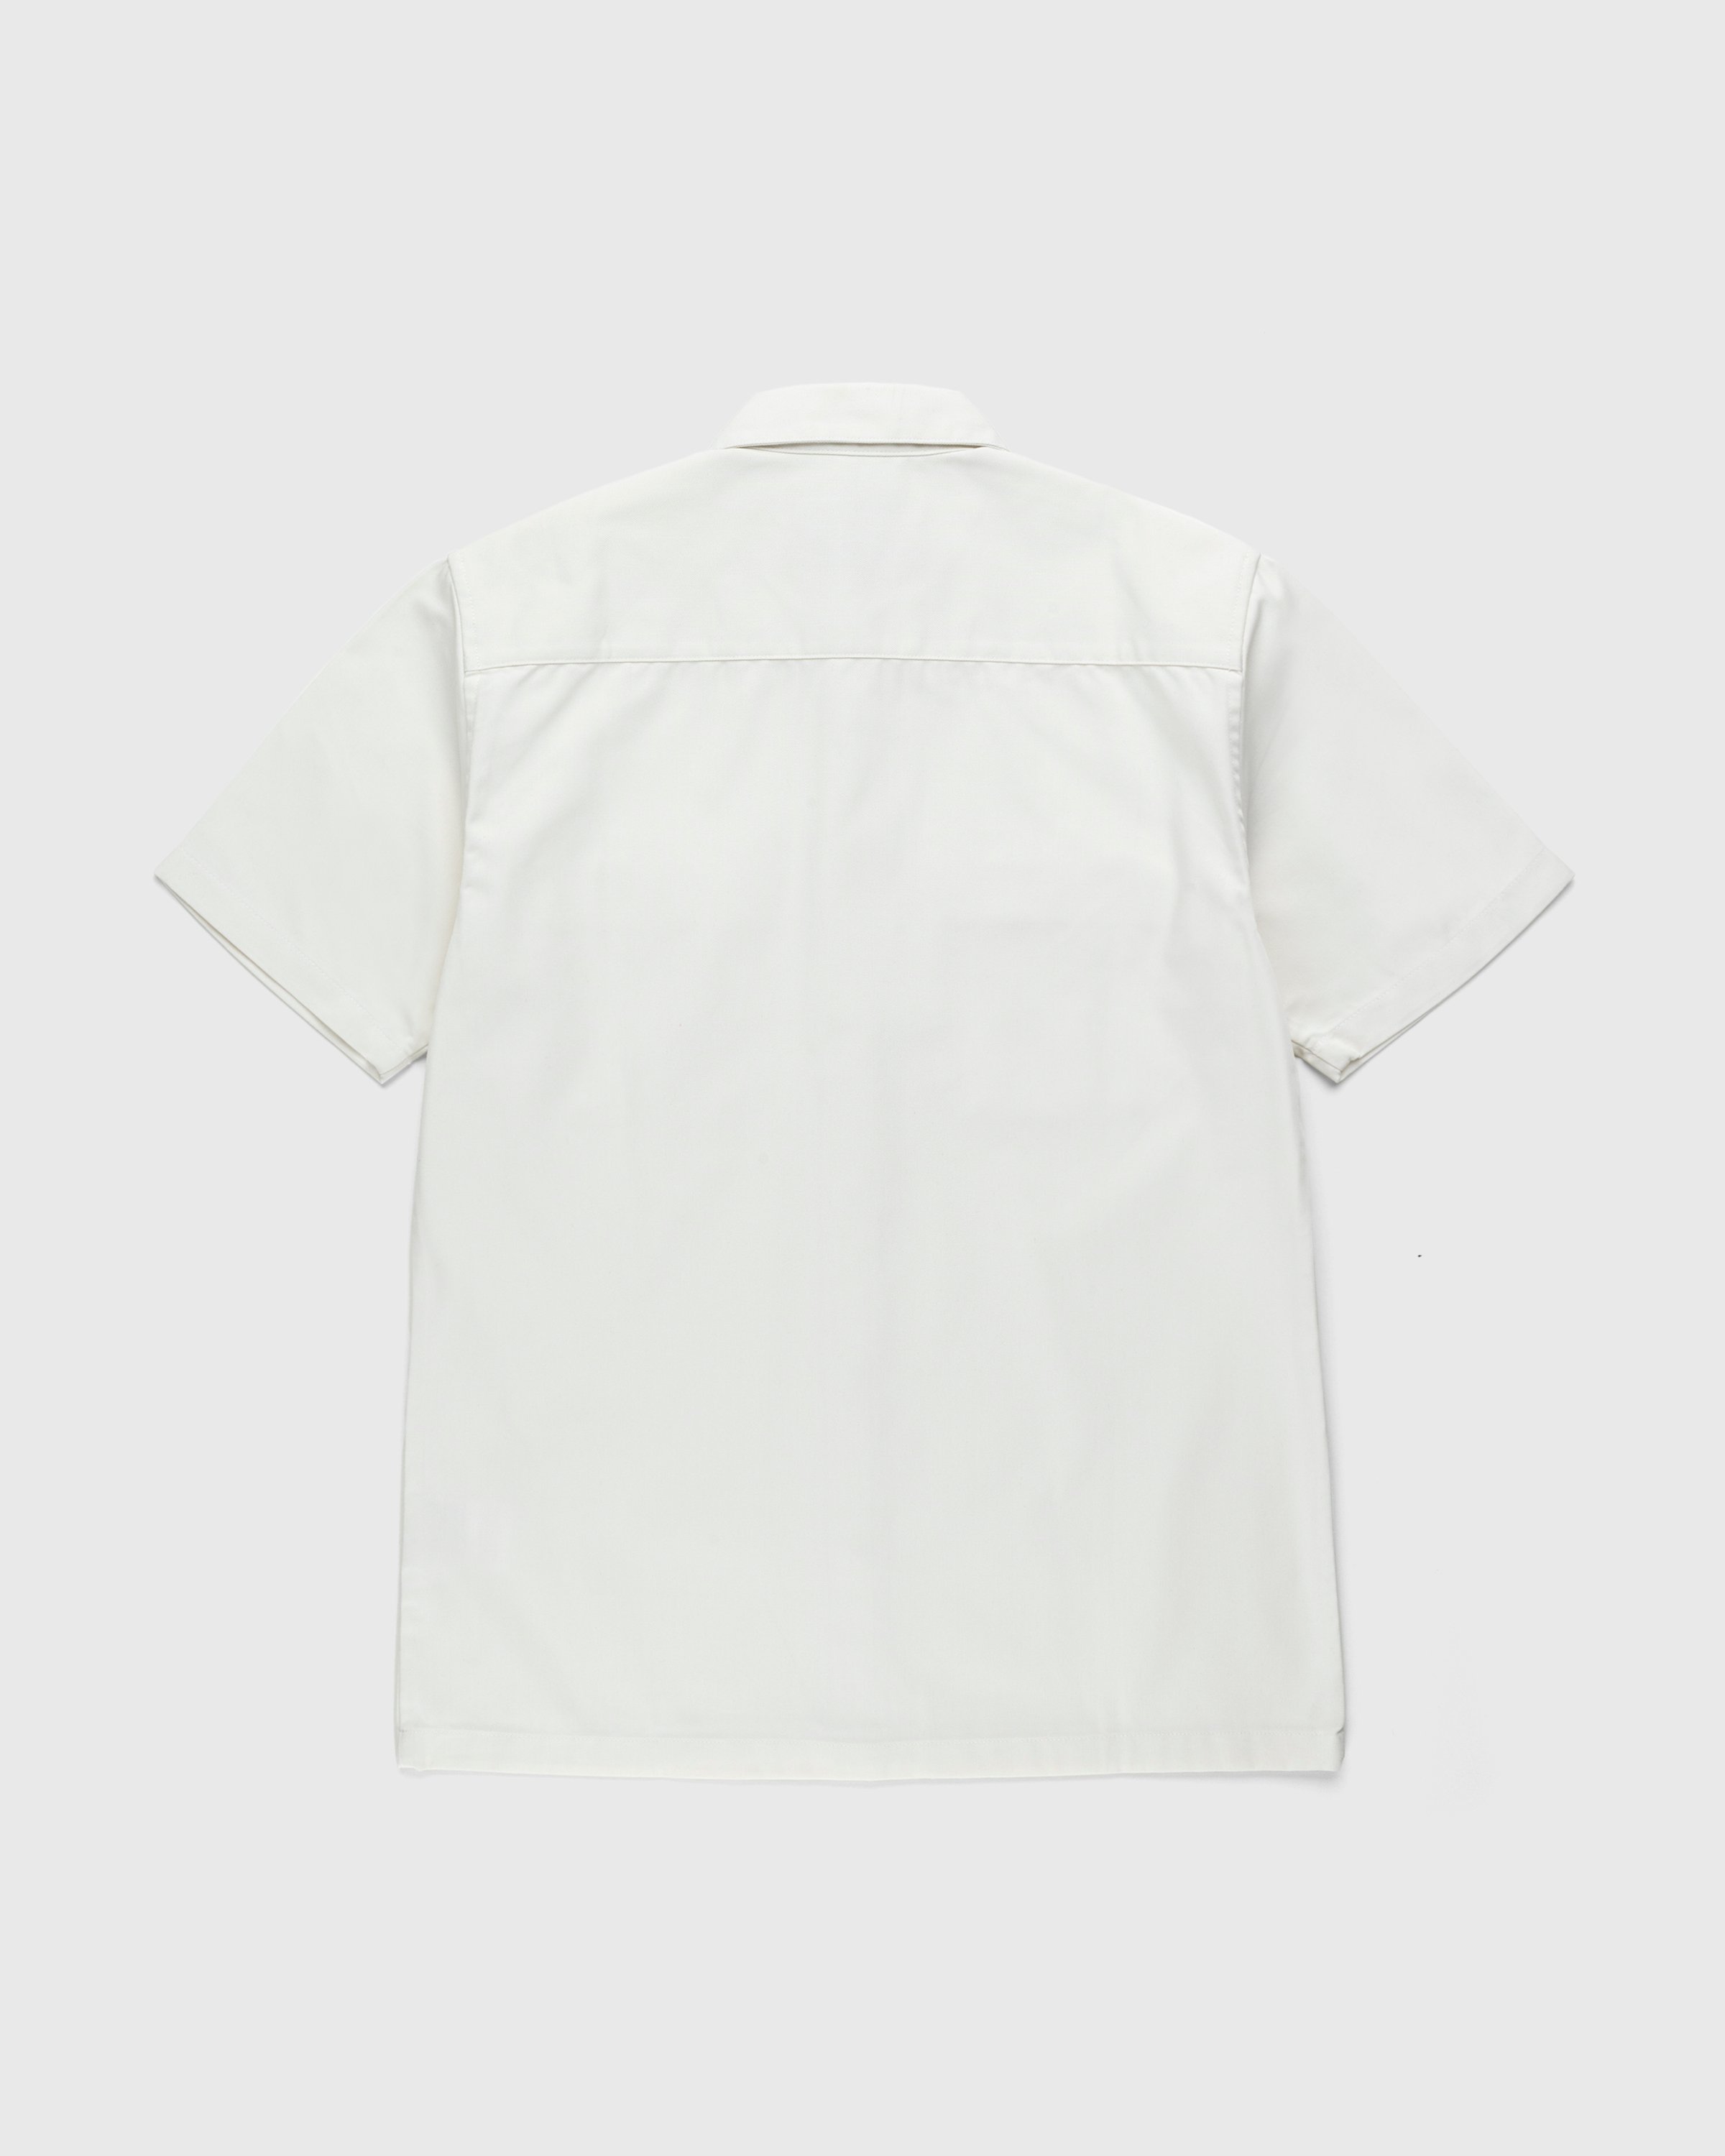 Carhartt WIP - Master Shirt Wax - Clothing - White - Image 2